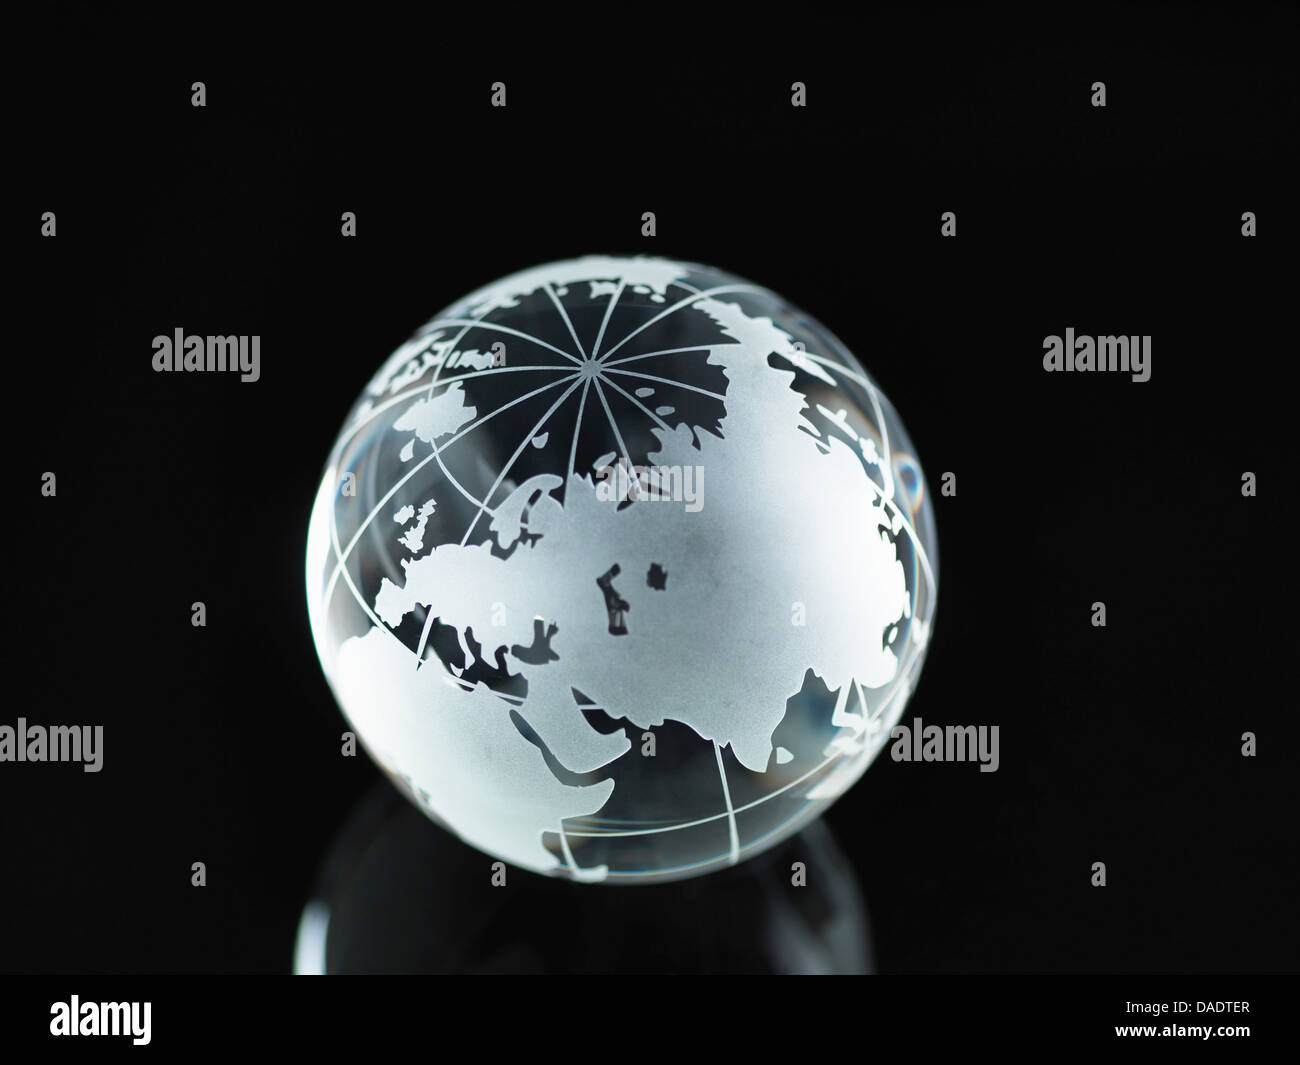 Globo de Cristal ilustrando de Asia, India, China, Rusia, Arabia Saudita, África, Oriente Medio Foto de stock